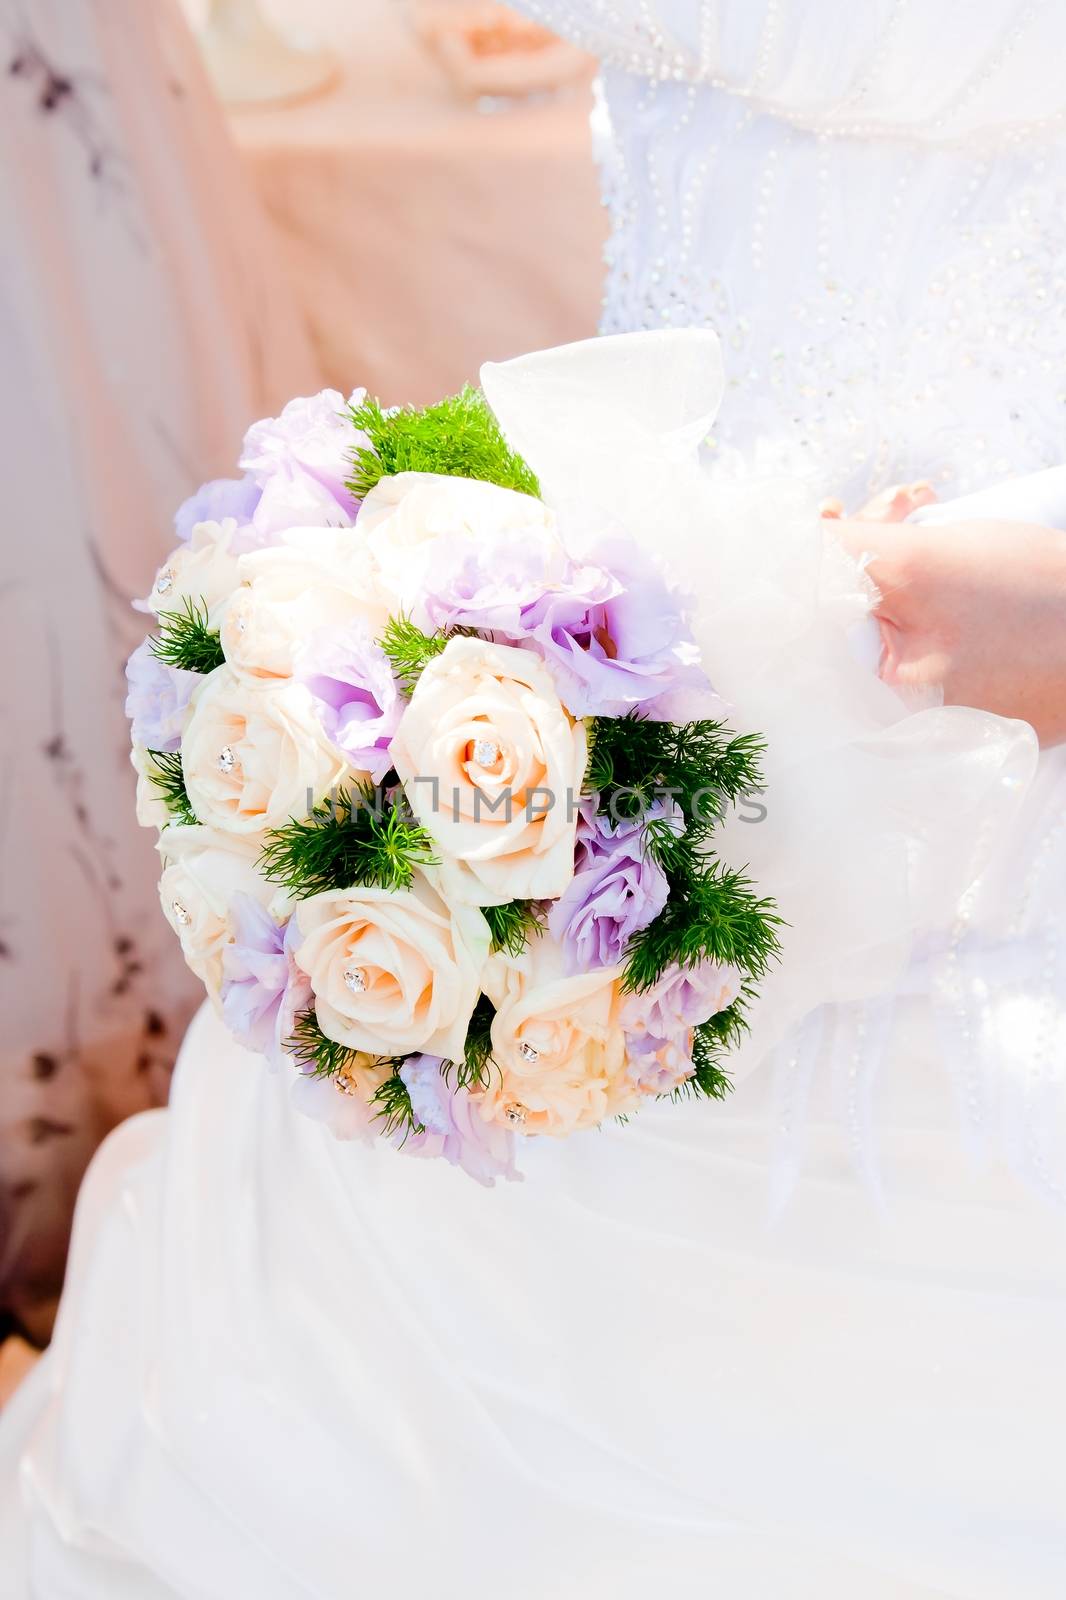 wedding bouquet at bride's hands by donfiore